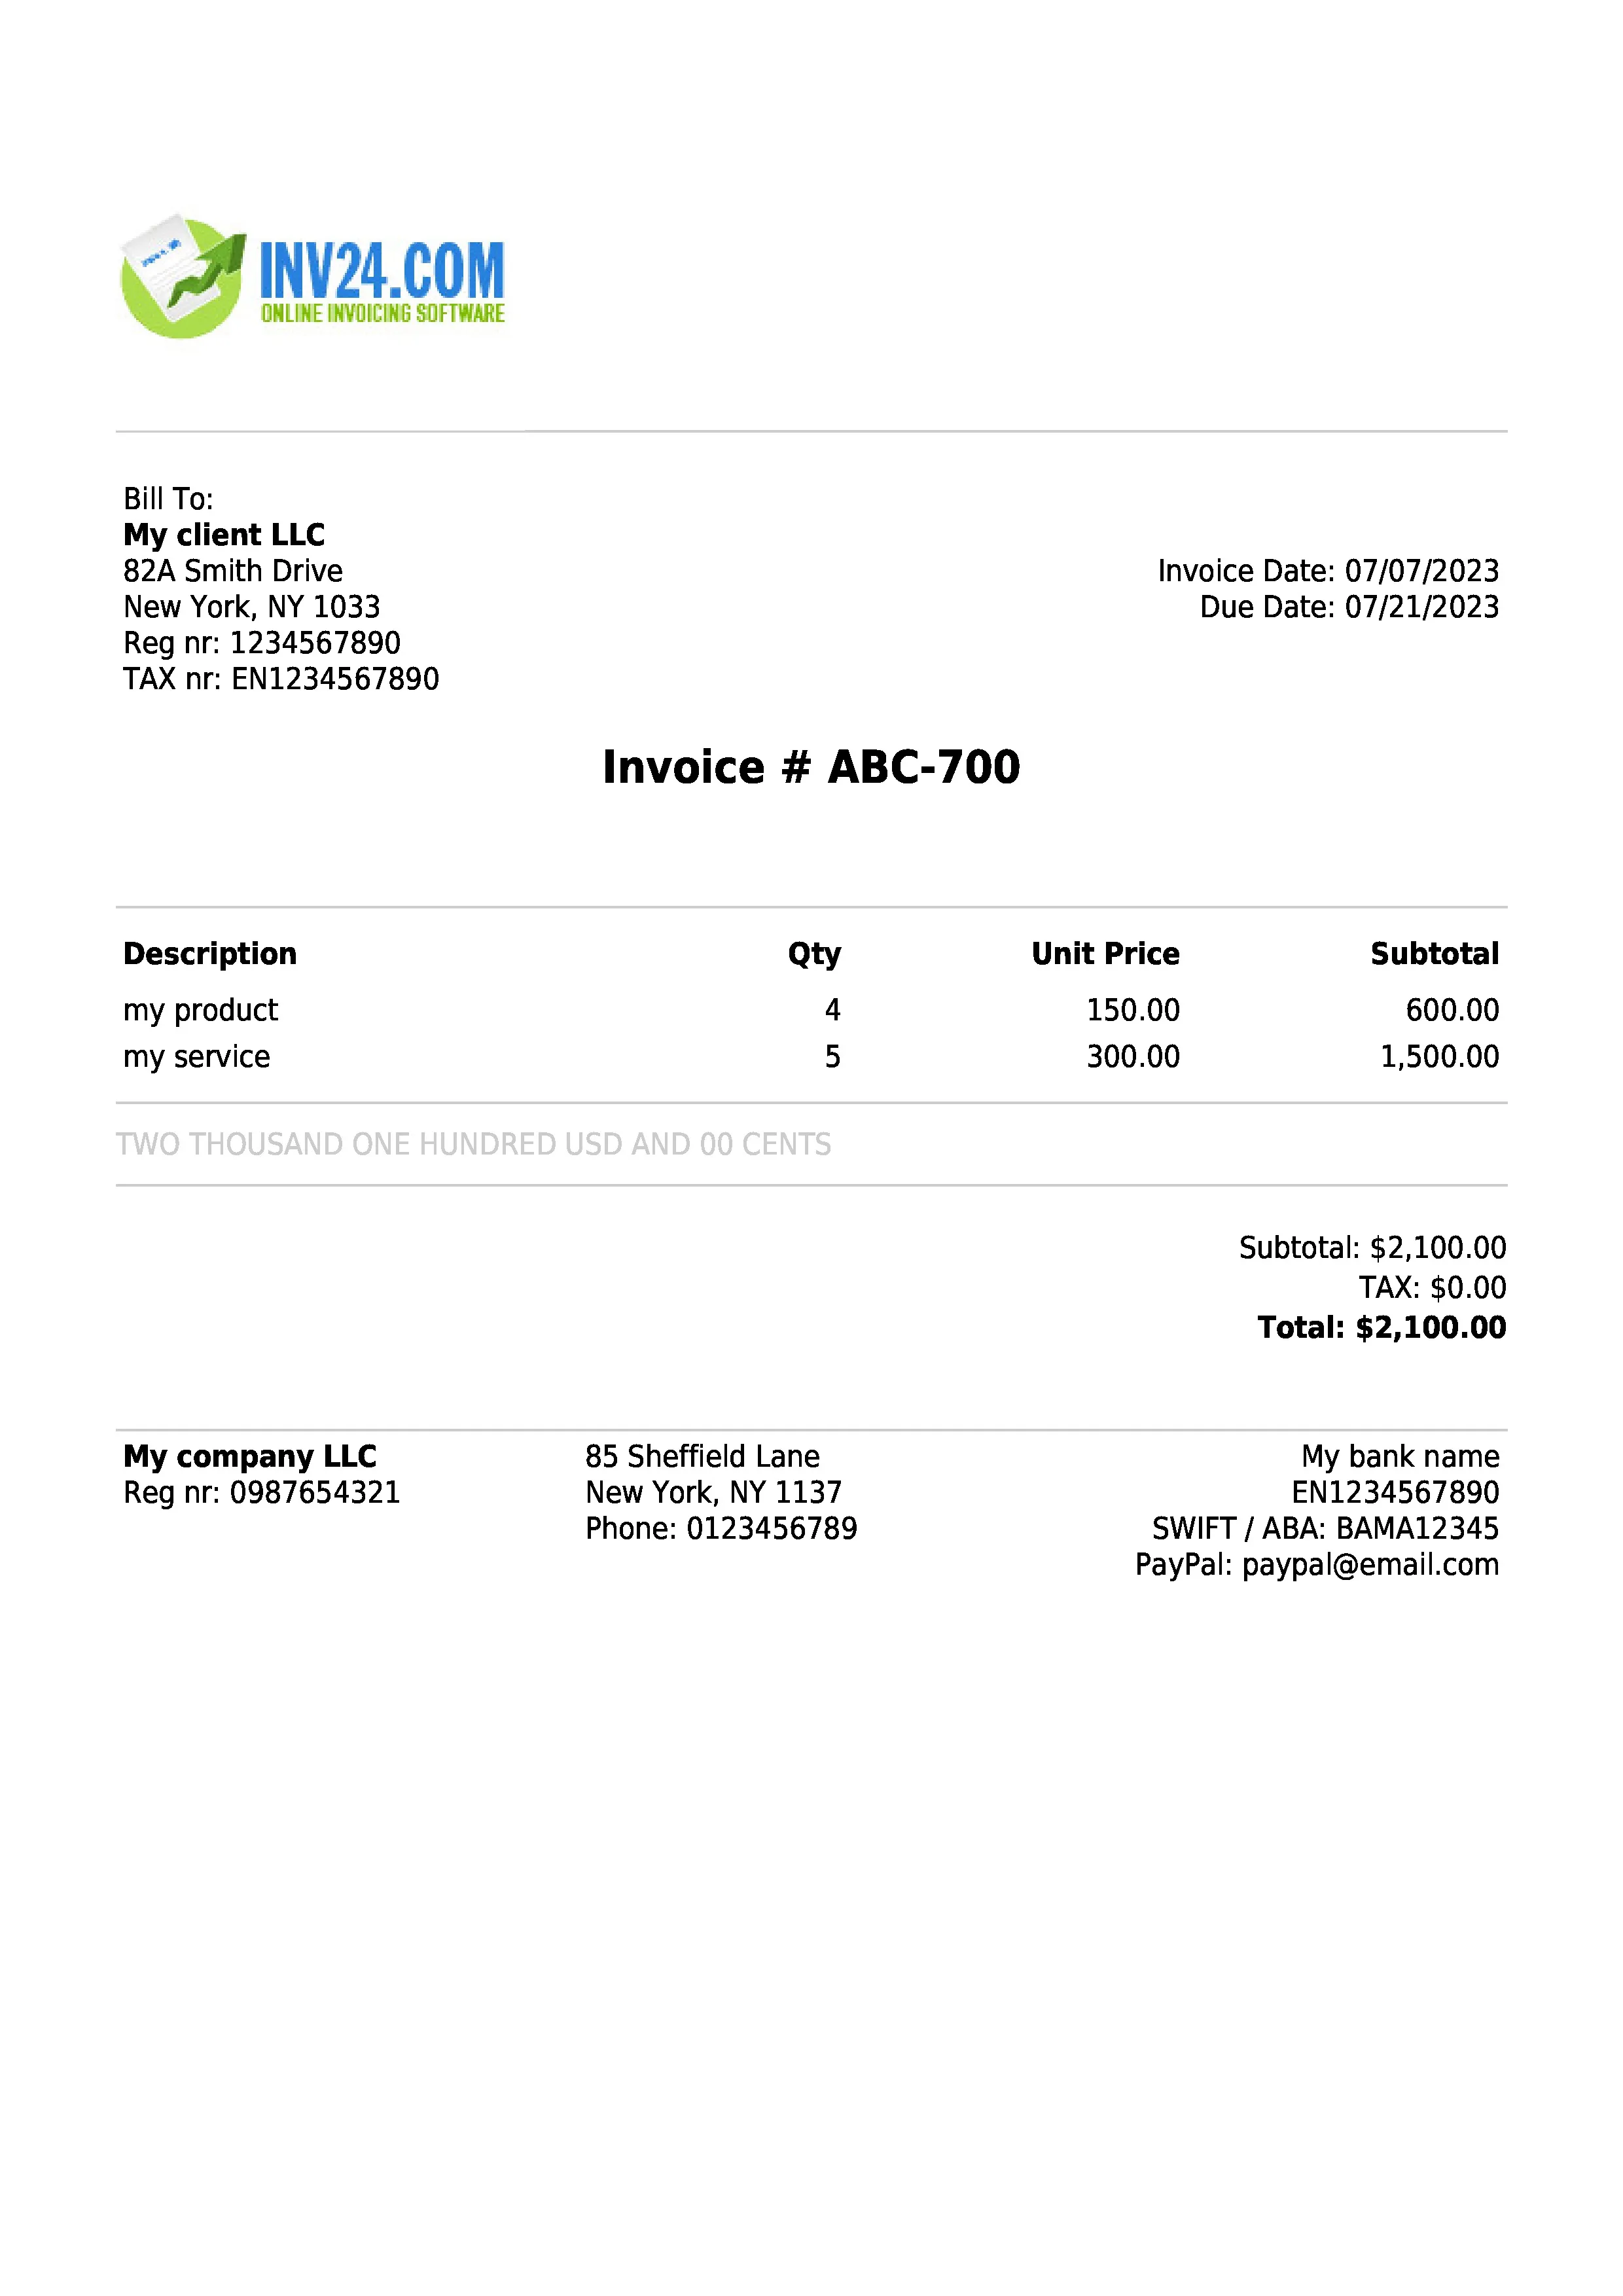 Invoice sample for TAX non-payer company